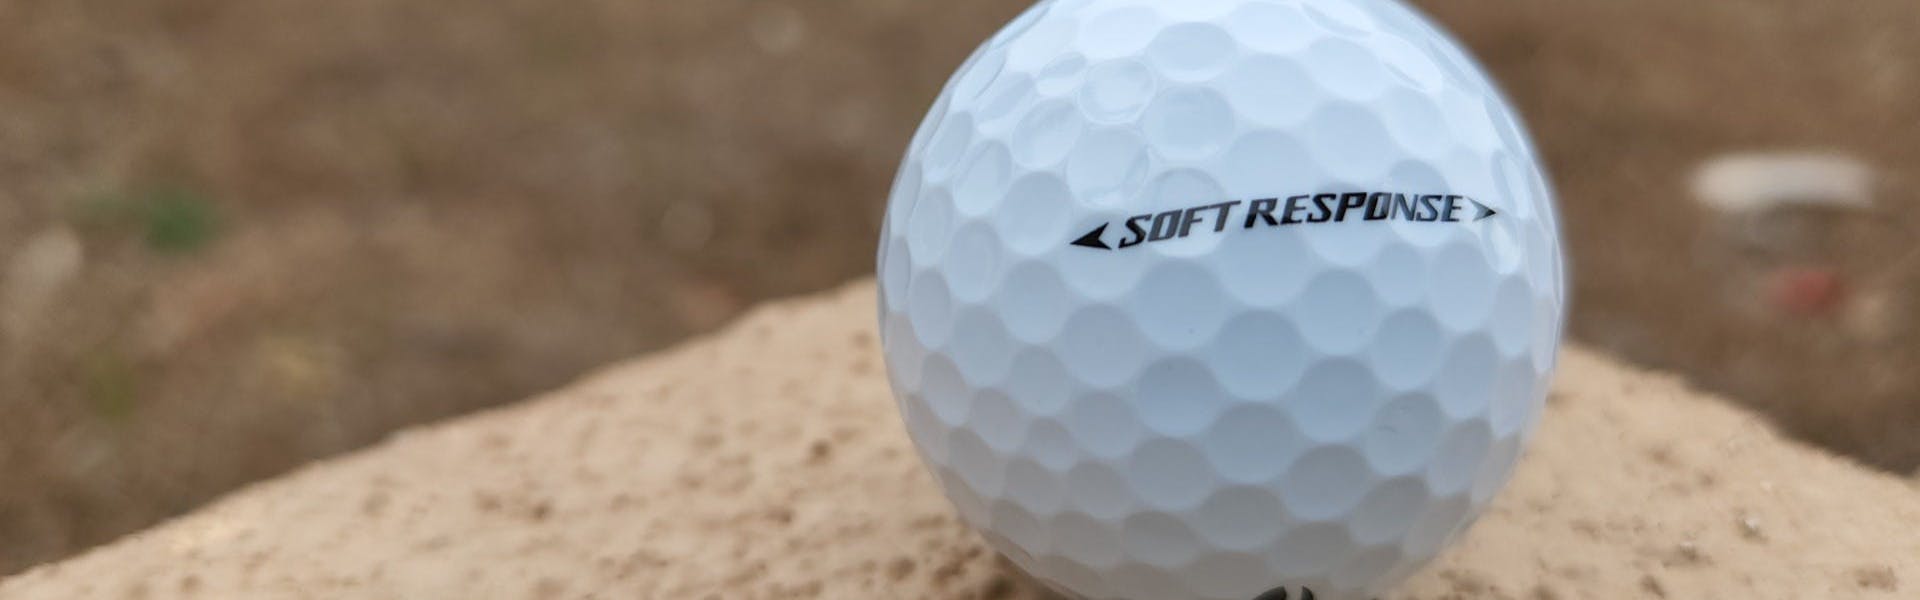 A TaylorMade Soft Response Golf Ball.